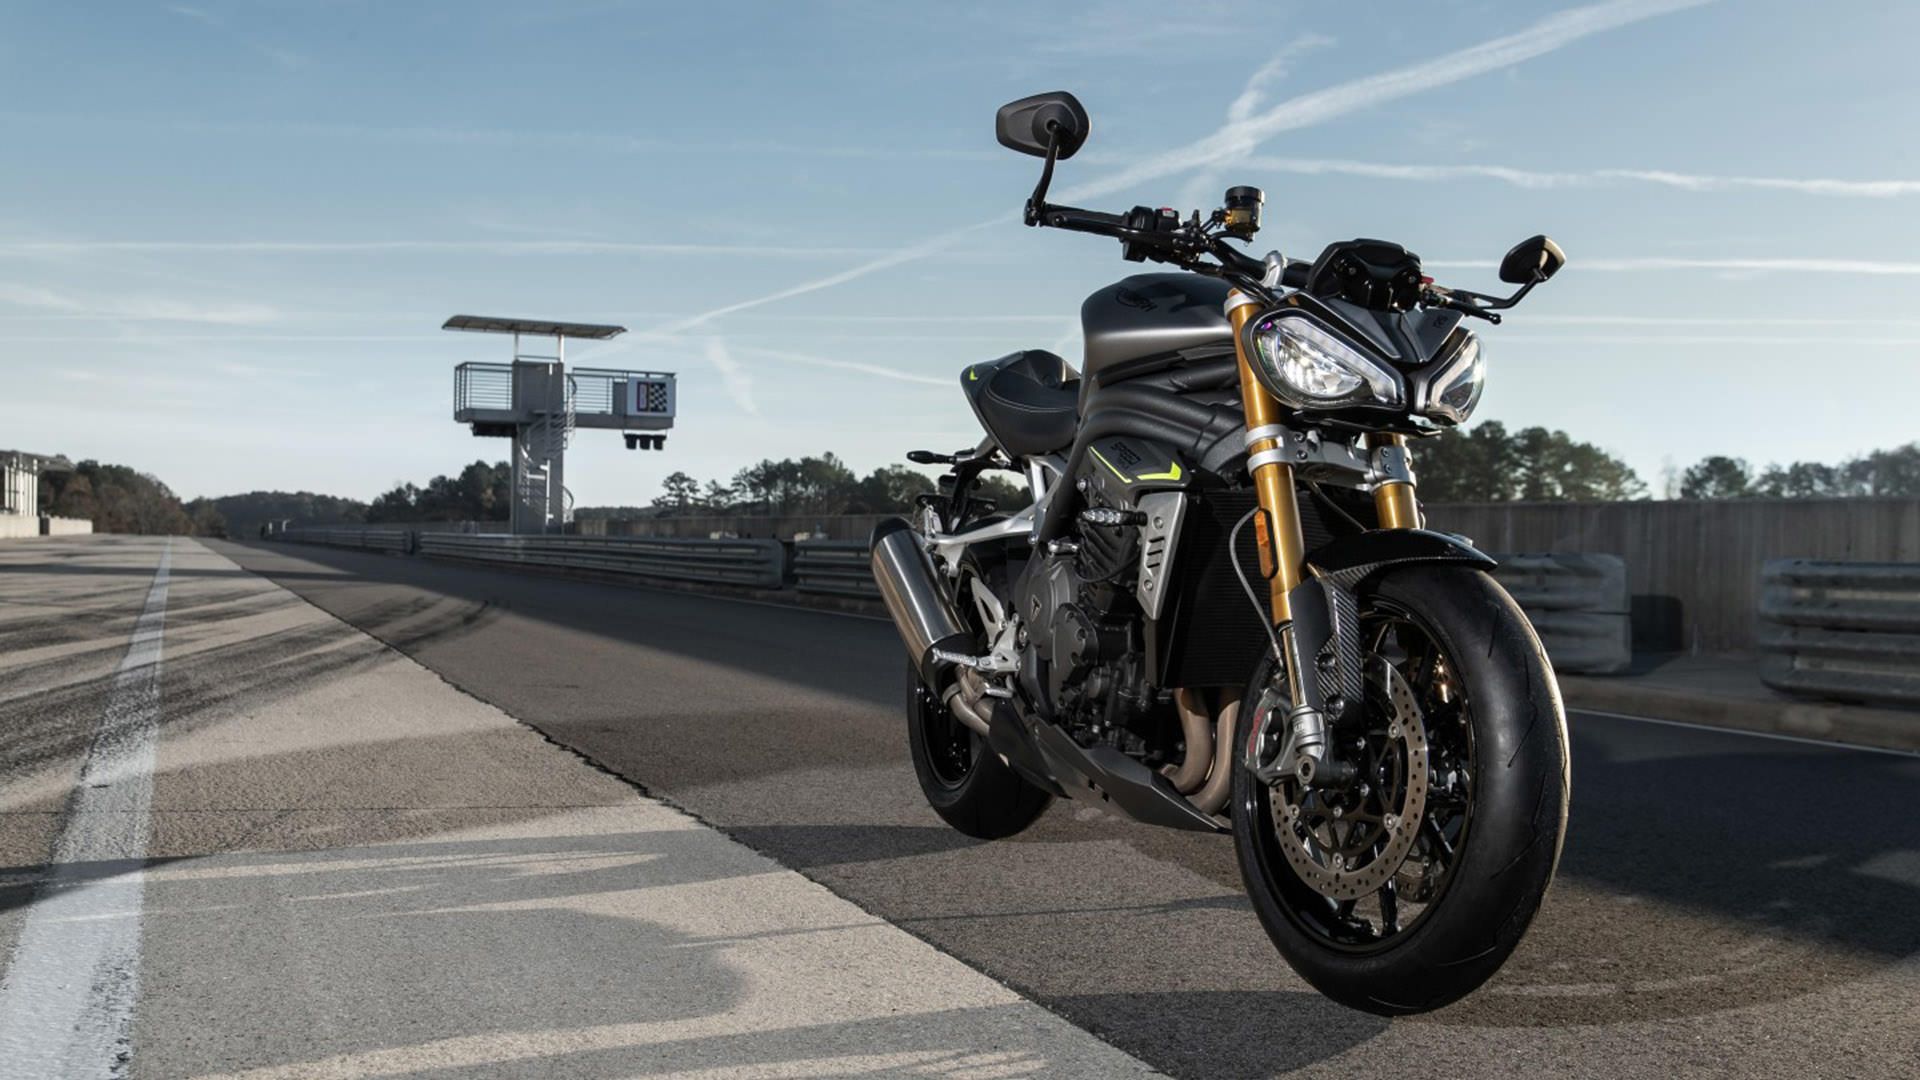 موتورسیکلت تریومف اسپید تریپل 1200 آر اس / Triumph Speed Triple 1200 RS 2021 Motorcycleدر مسیر موتورسواری